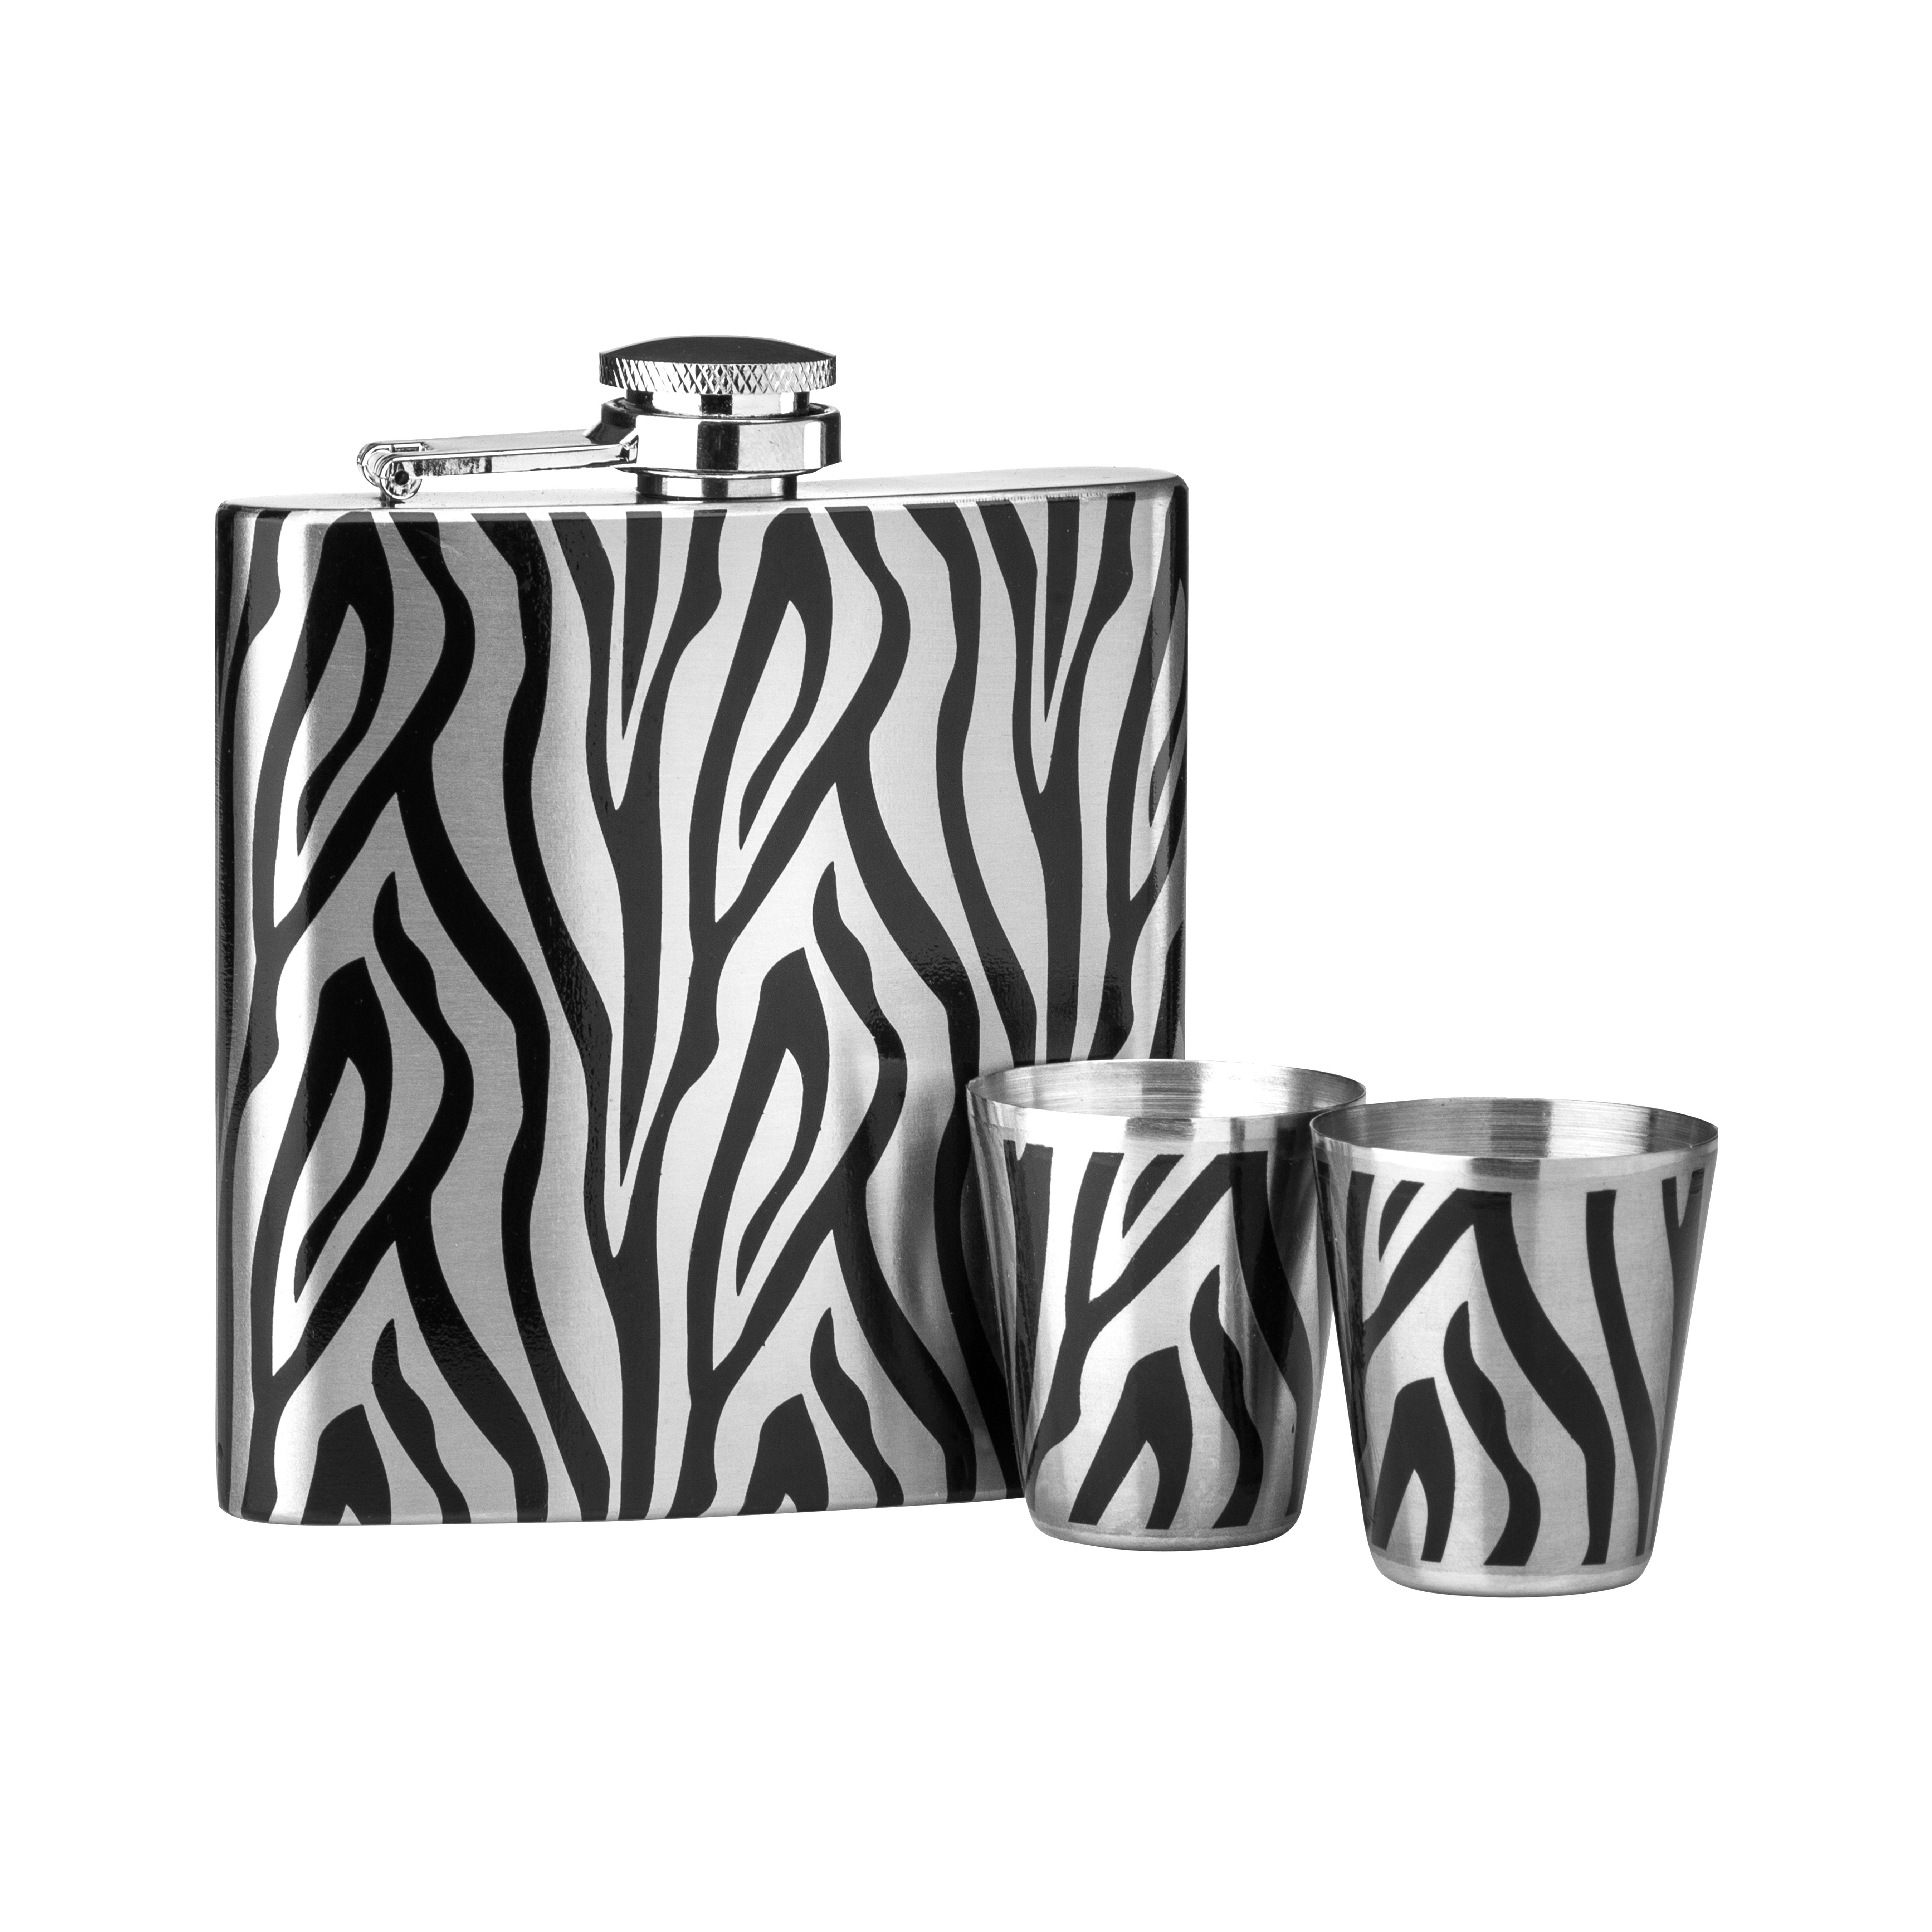 6 oz Stainless Steel Zebra Design Hip Flask